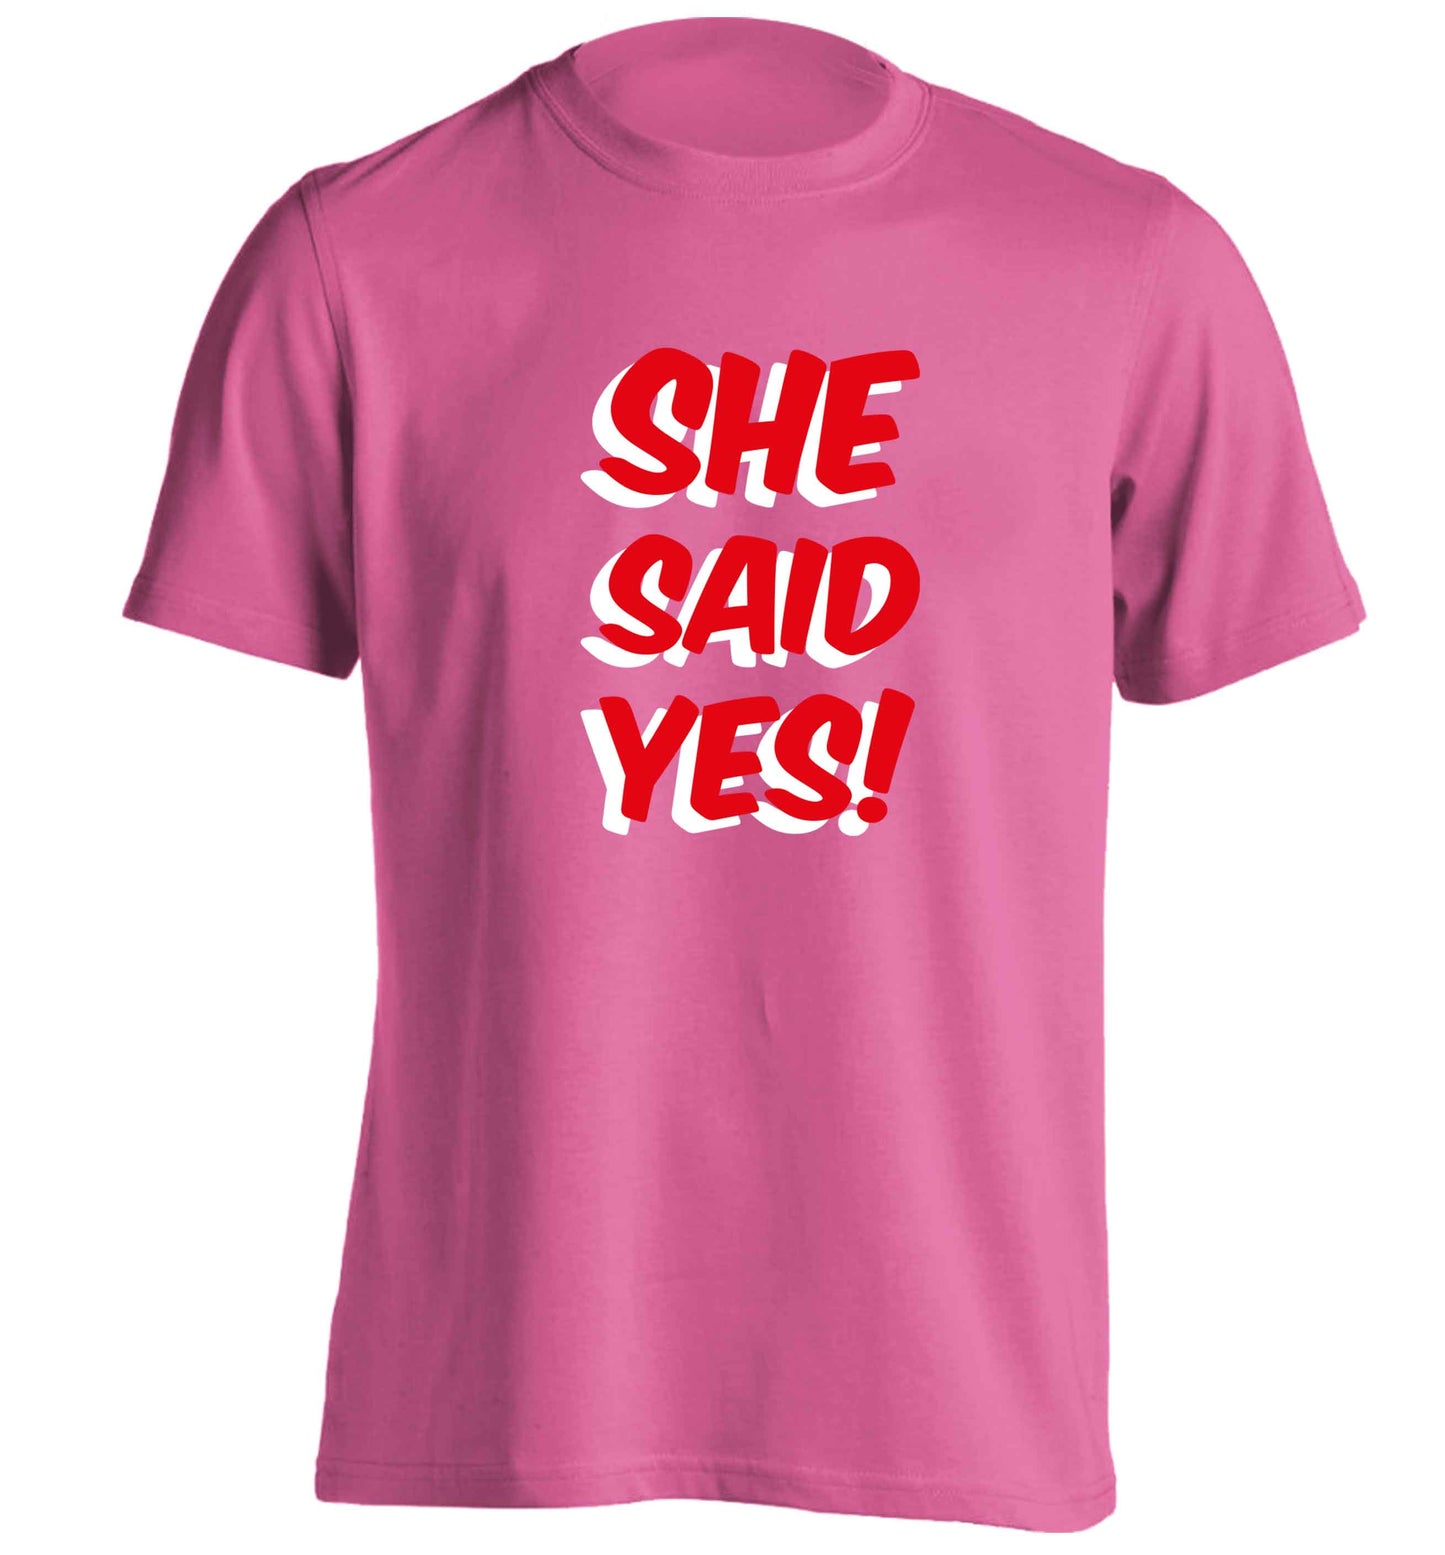 She said yes adults unisex pink Tshirt 2XL